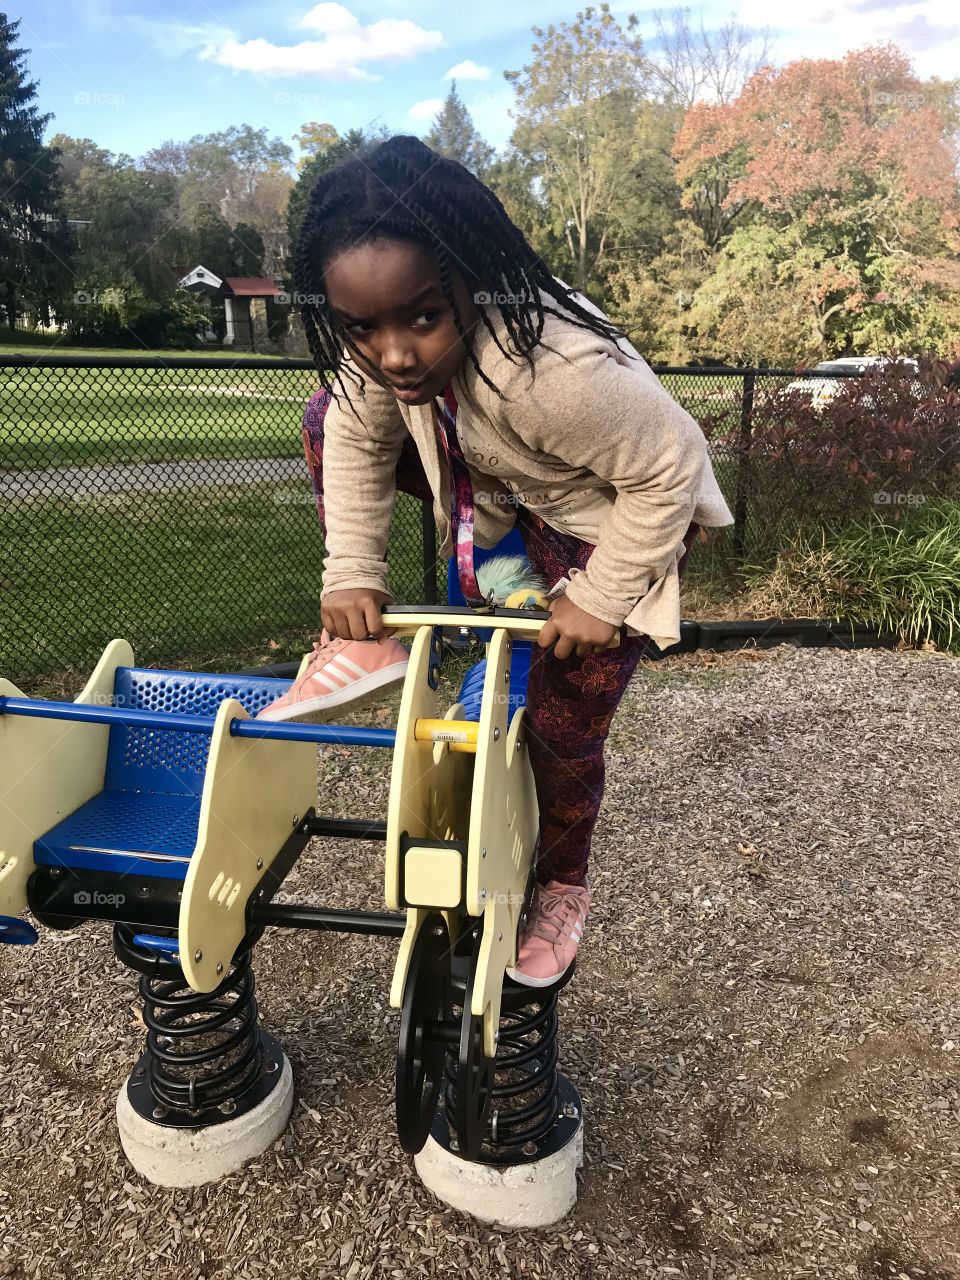 Child Climbing into ride-on toy playground 